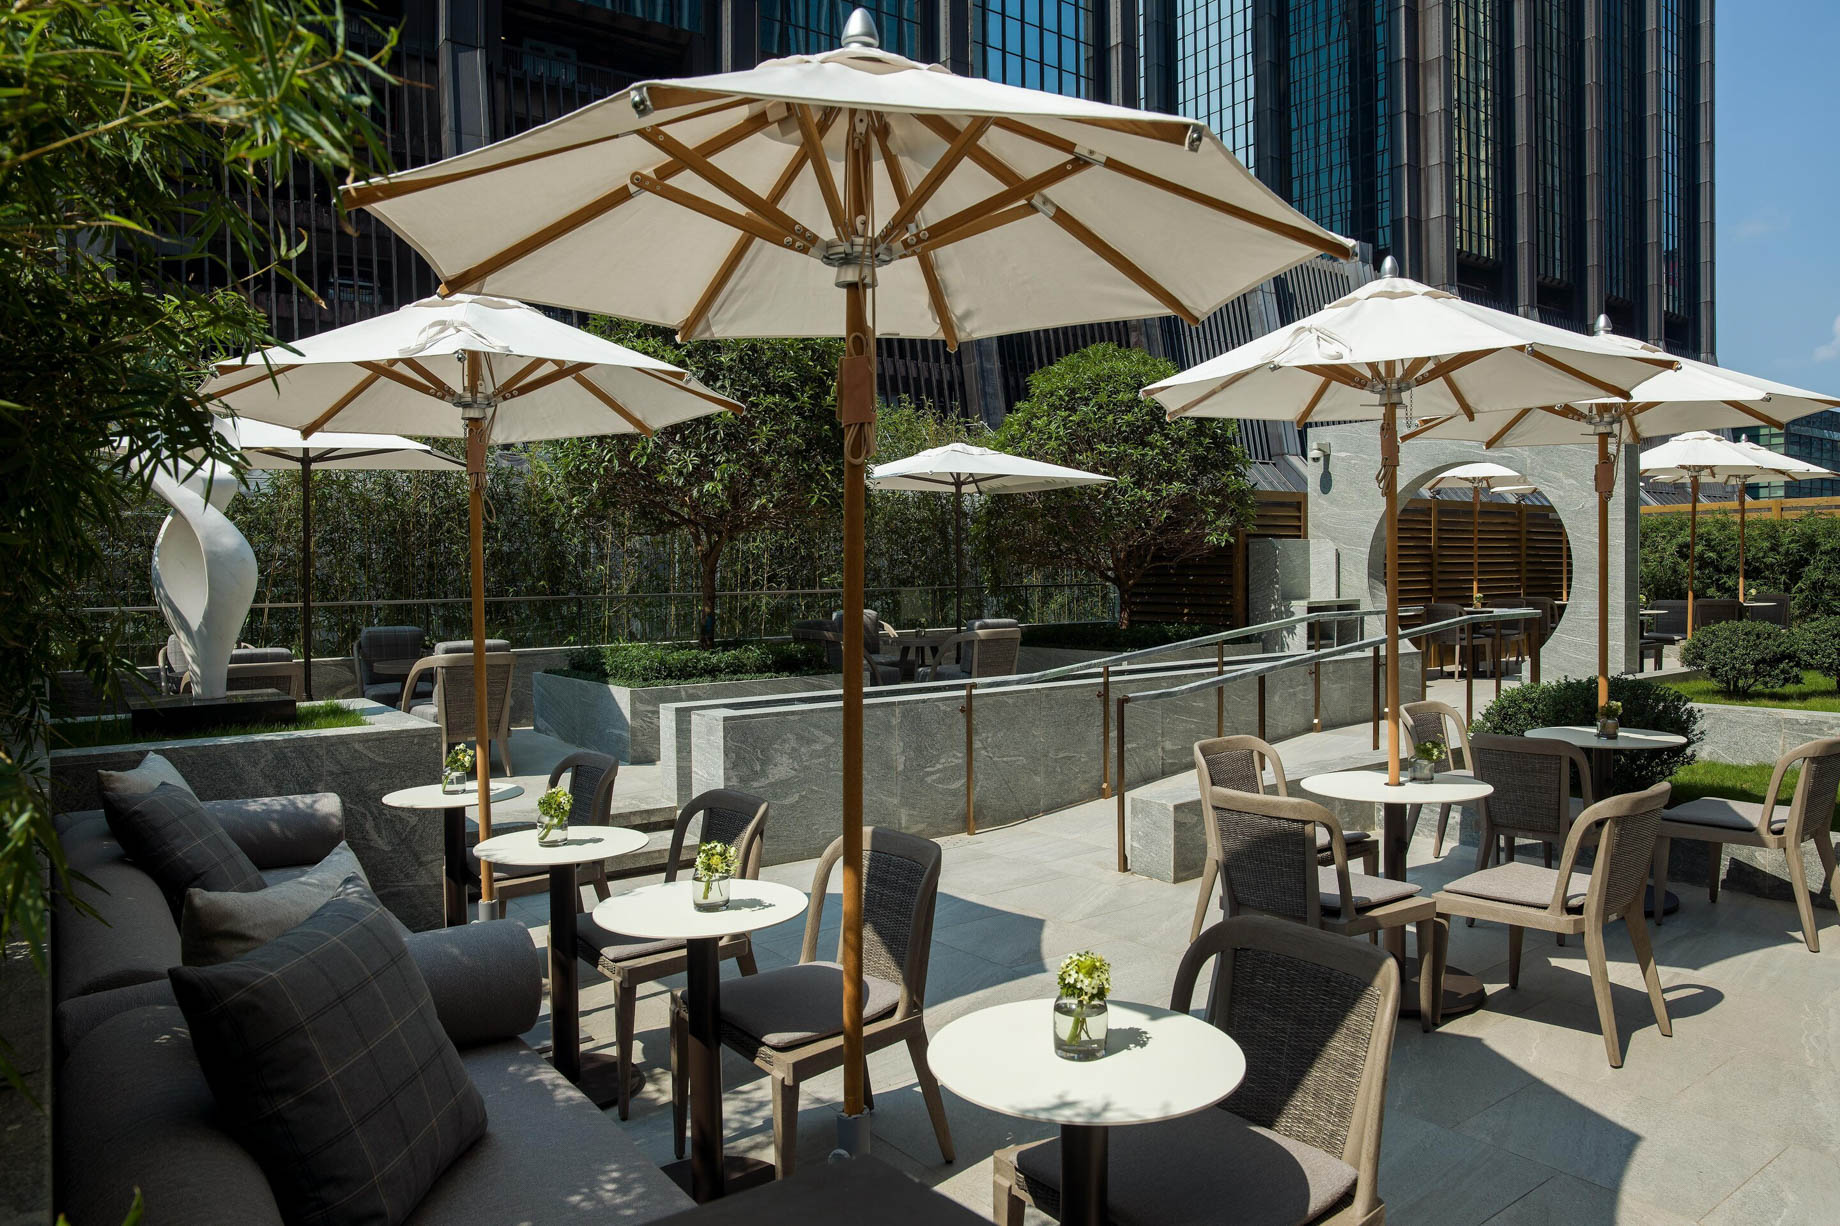 The St. Regis Hong Kong Hotel – Wan Chai, Hong Kong – The Terrace